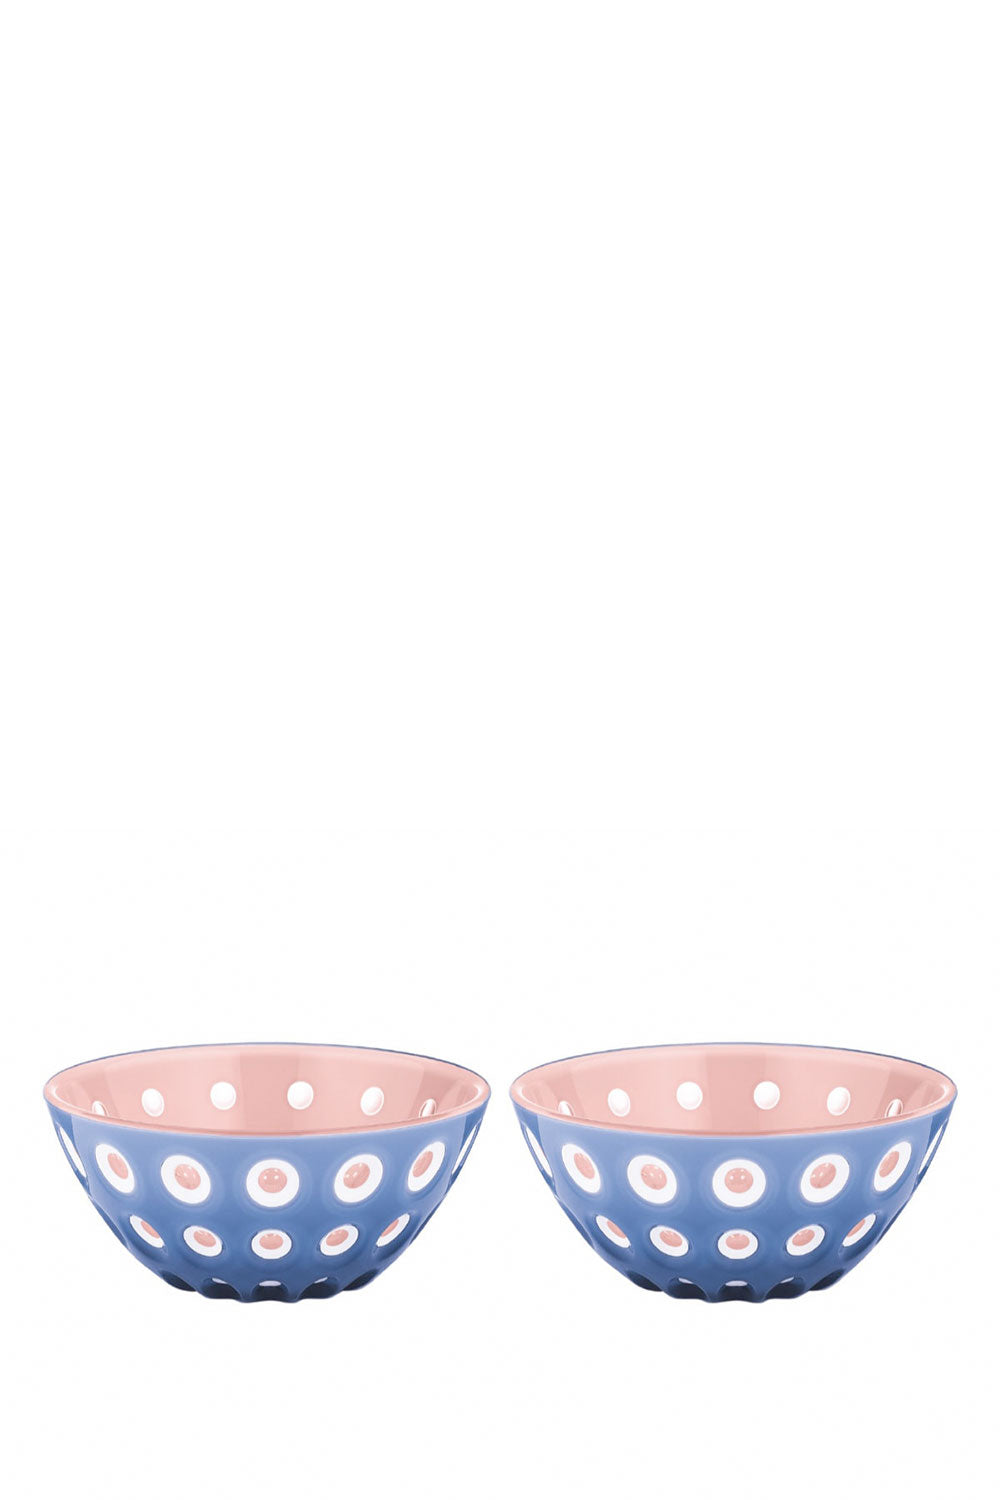 Murrine Pink & Blue Bowls Set Of 2, 12 cm - Maison7